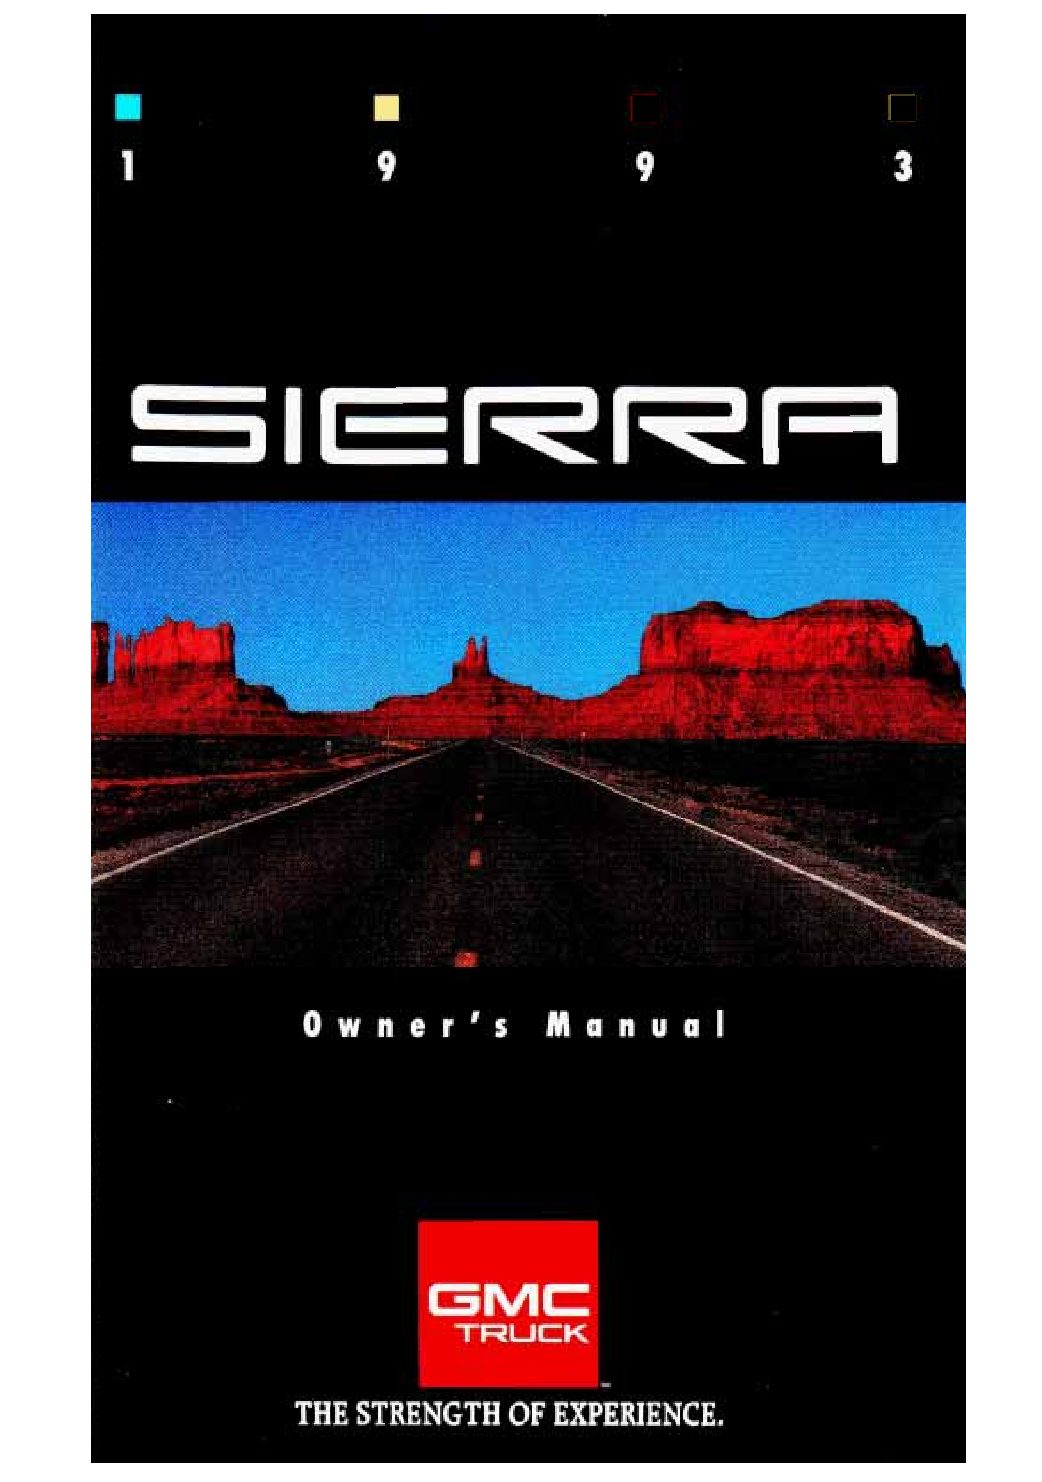 1993 GMC Sierra Image